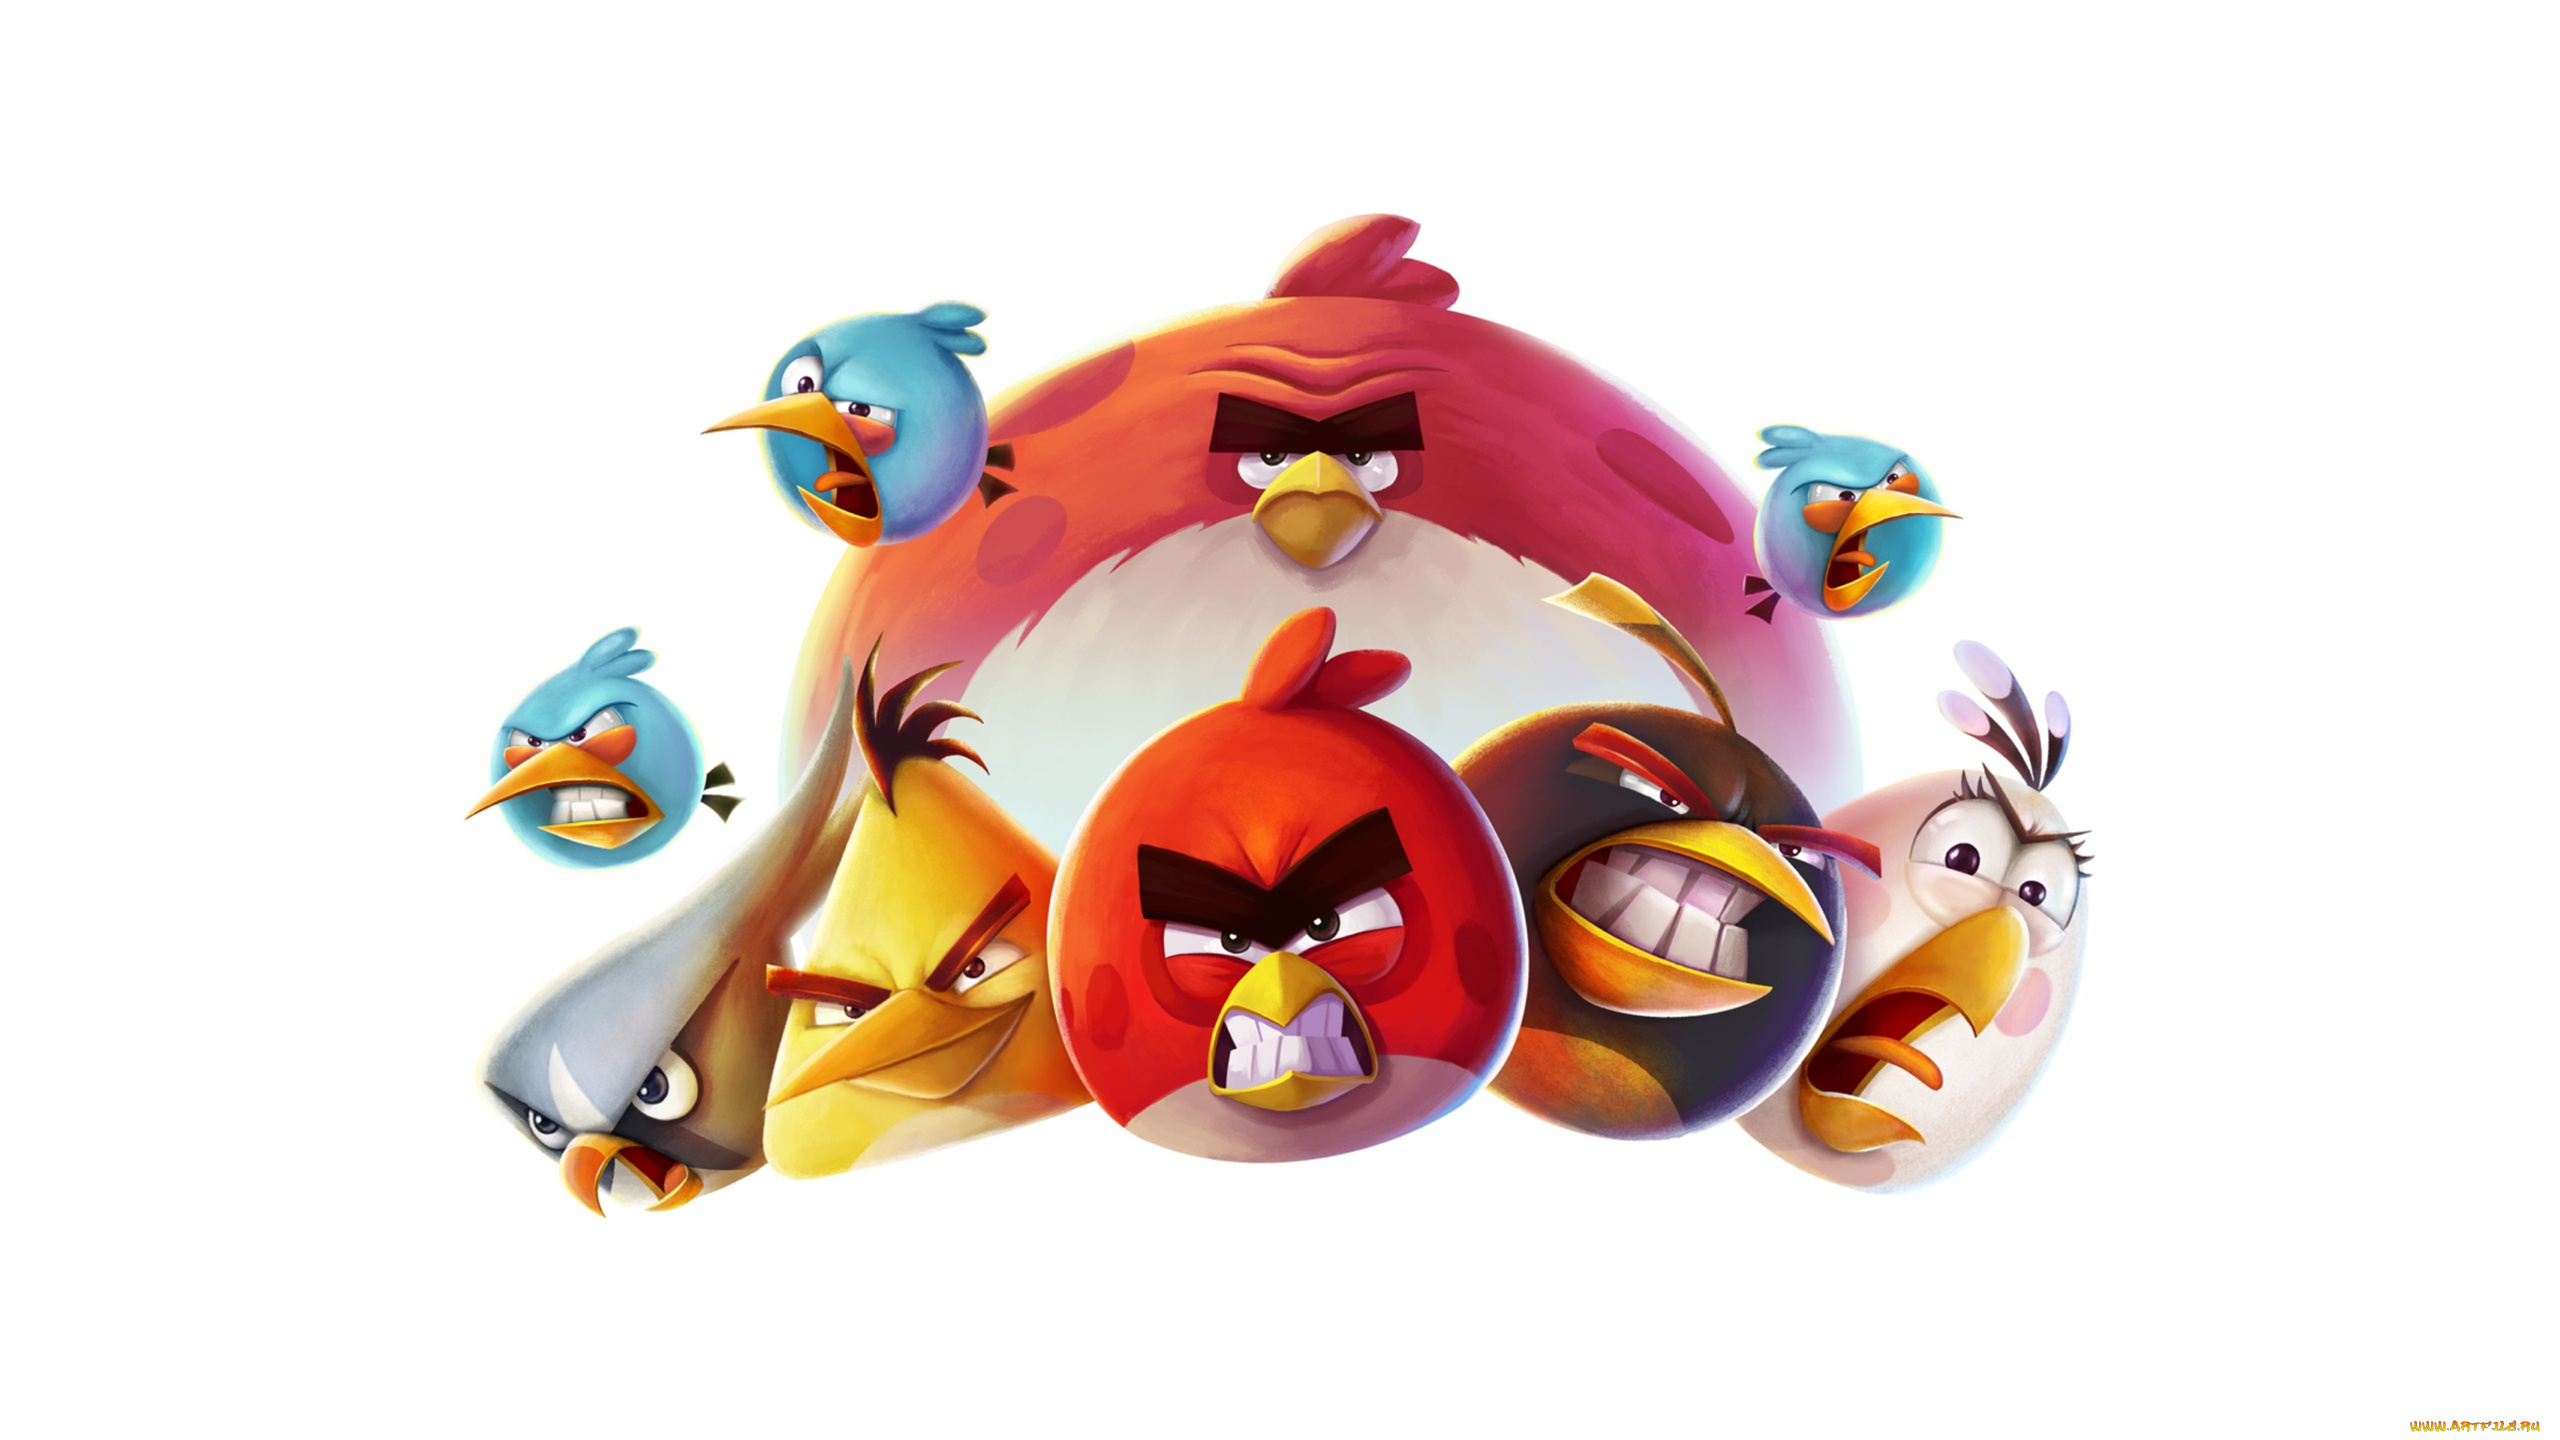 Angry birds 1.5 2. Энгри бердз злые птички. Angry Birds 2 игра птички. Игра Энгри бердз 2 злые птицы. Энгри бердз 2 злая птица.